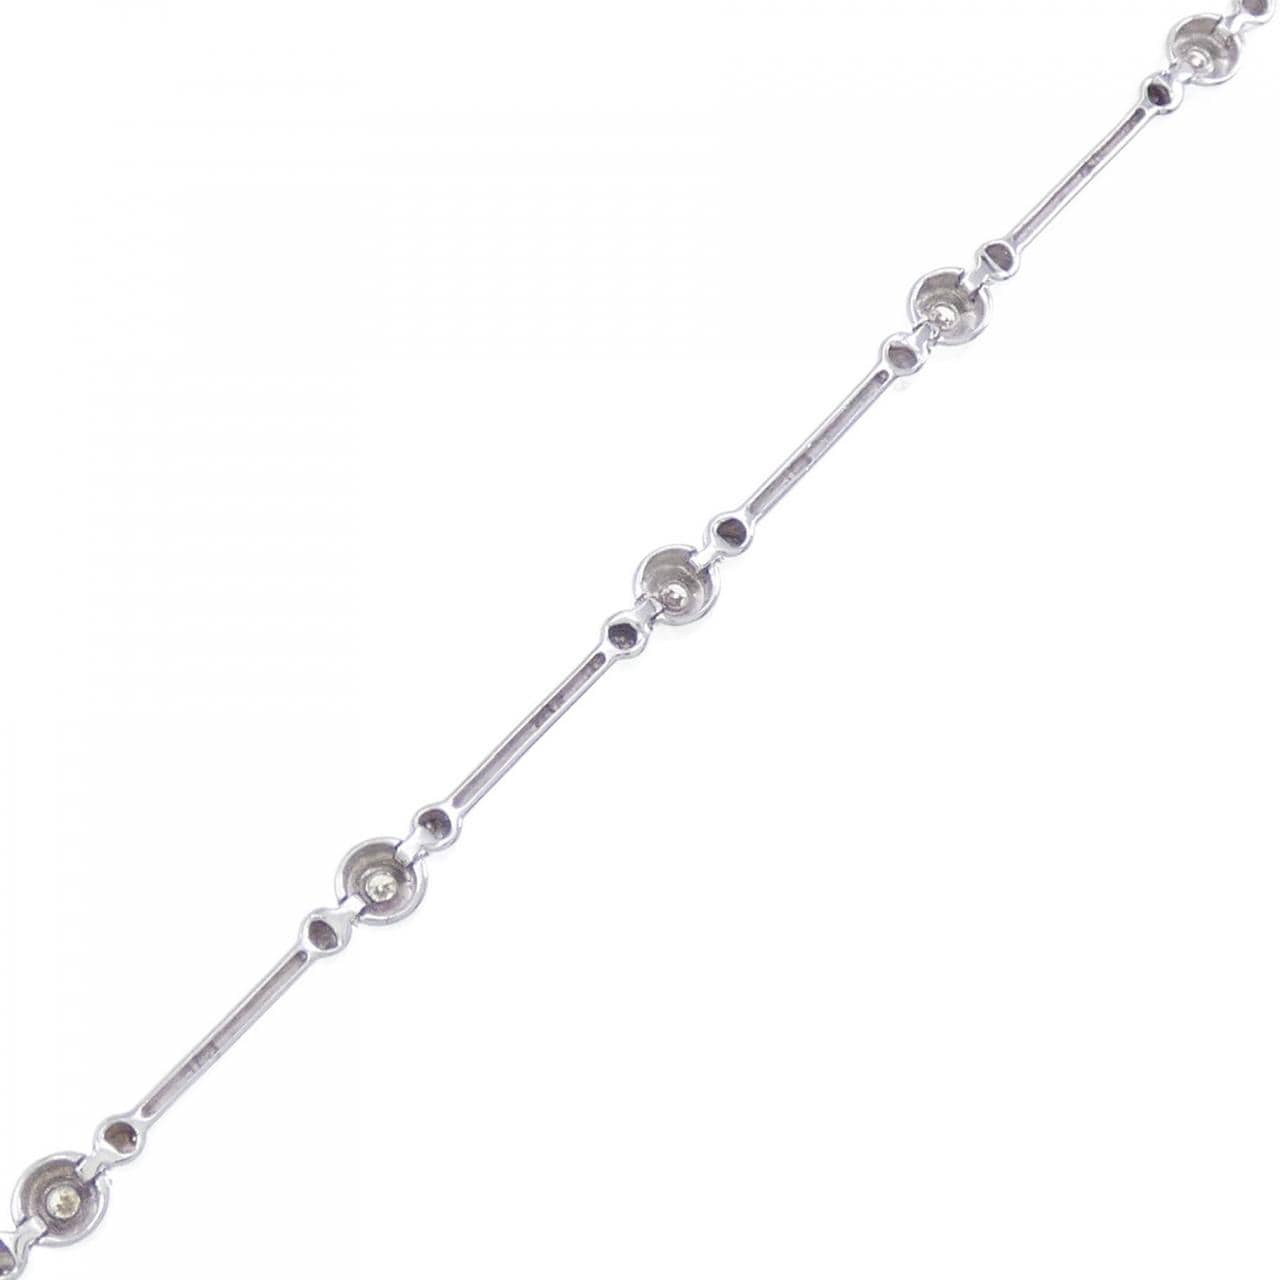 K18WG Diamond bracelet 0.2CT